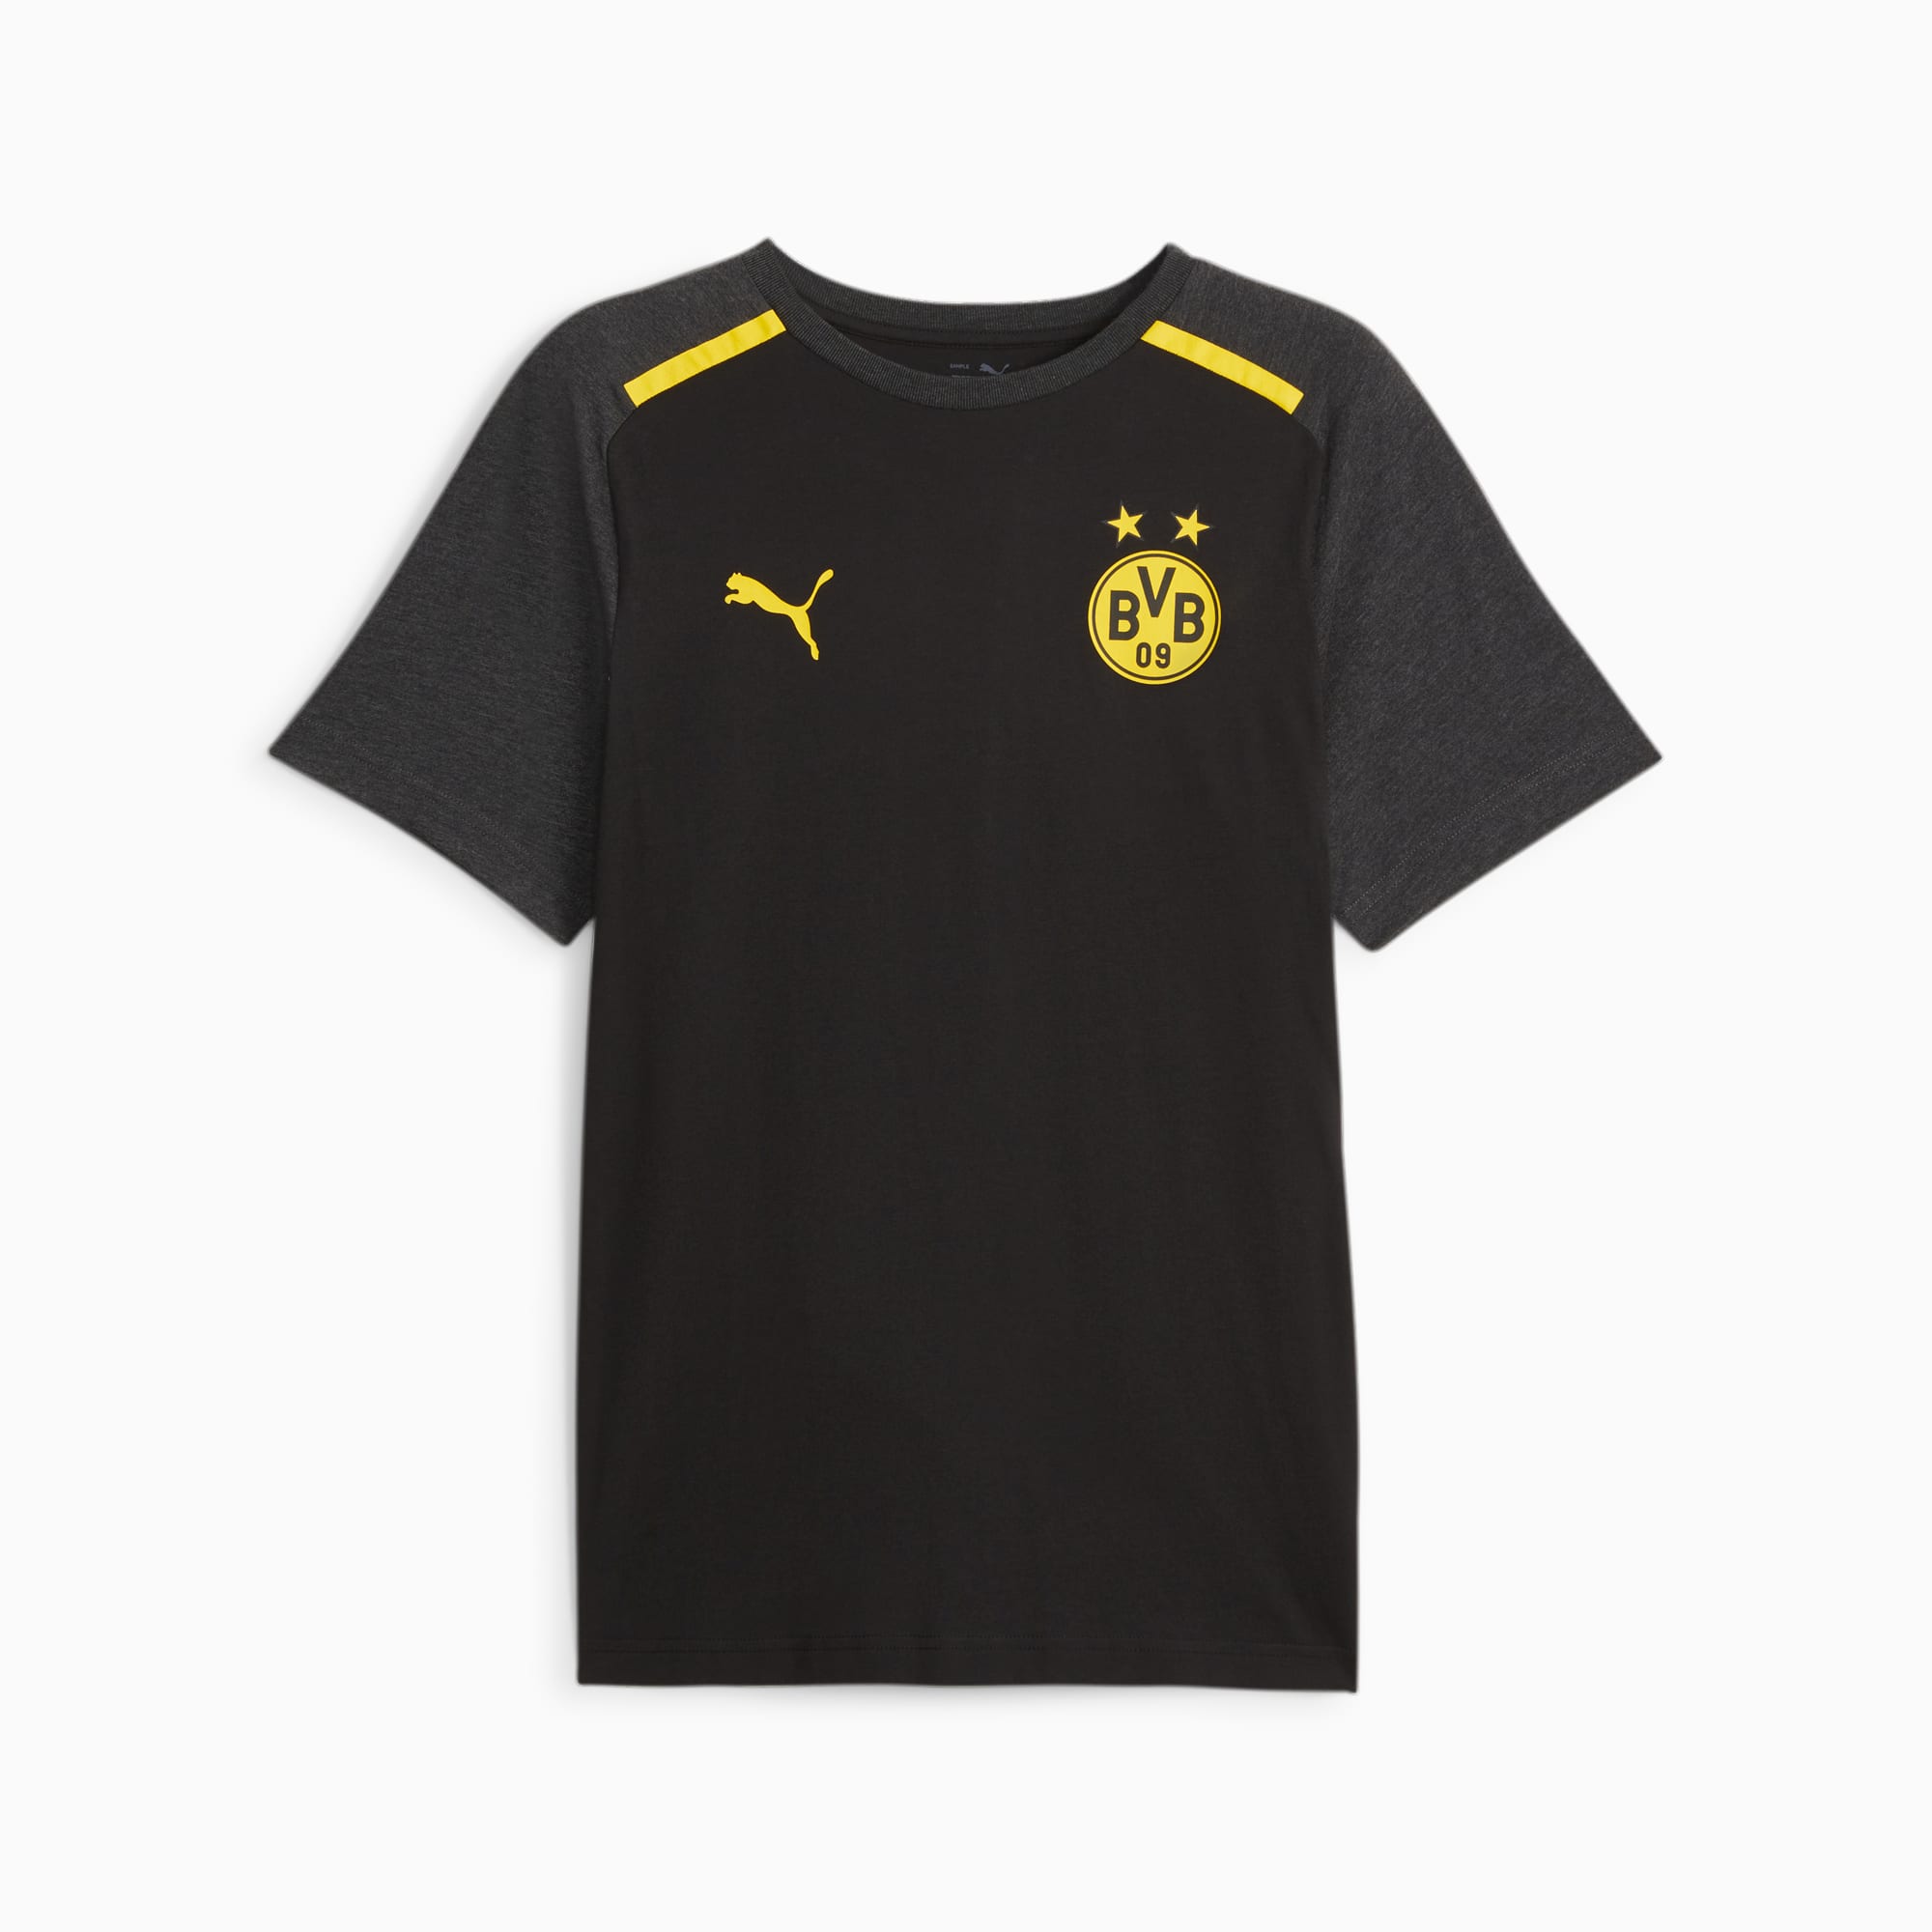 Men's PUMA Borussia Dortmund Football Casuals T-Shirt, Black/Cyber Yellow, Size XL, Clothing